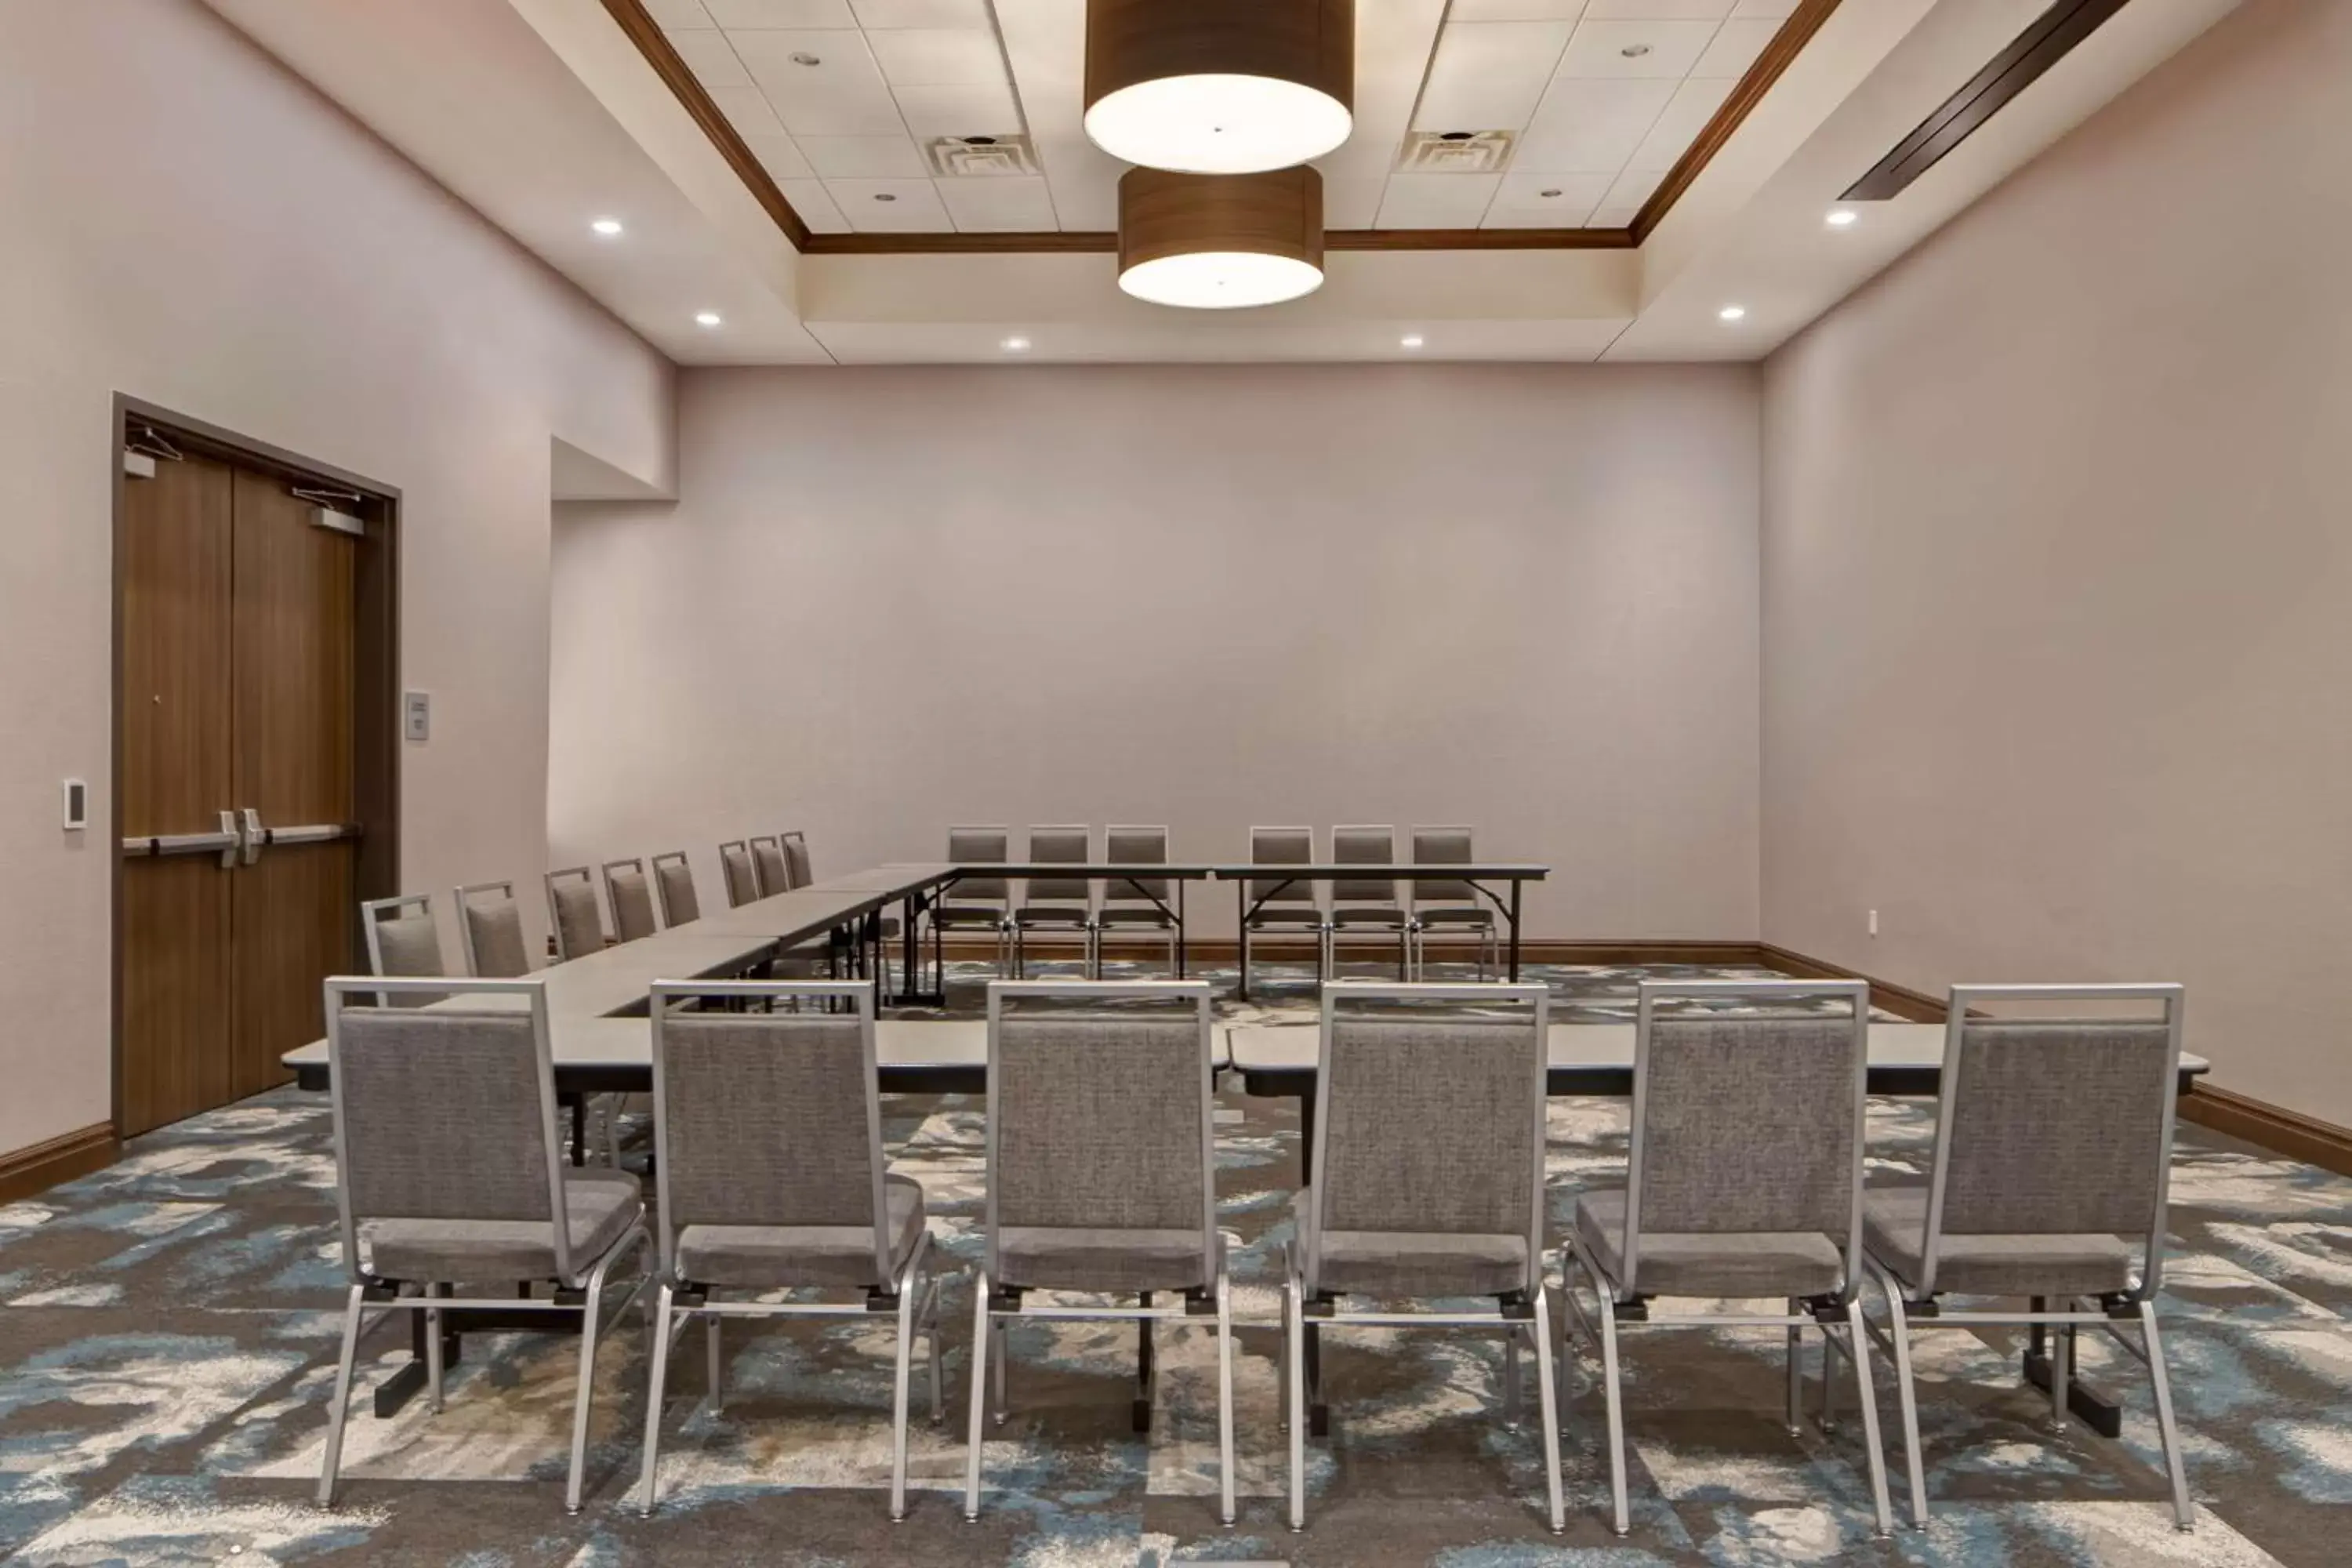 Meeting/conference room in Hilton Garden Inn Summerville, Sc